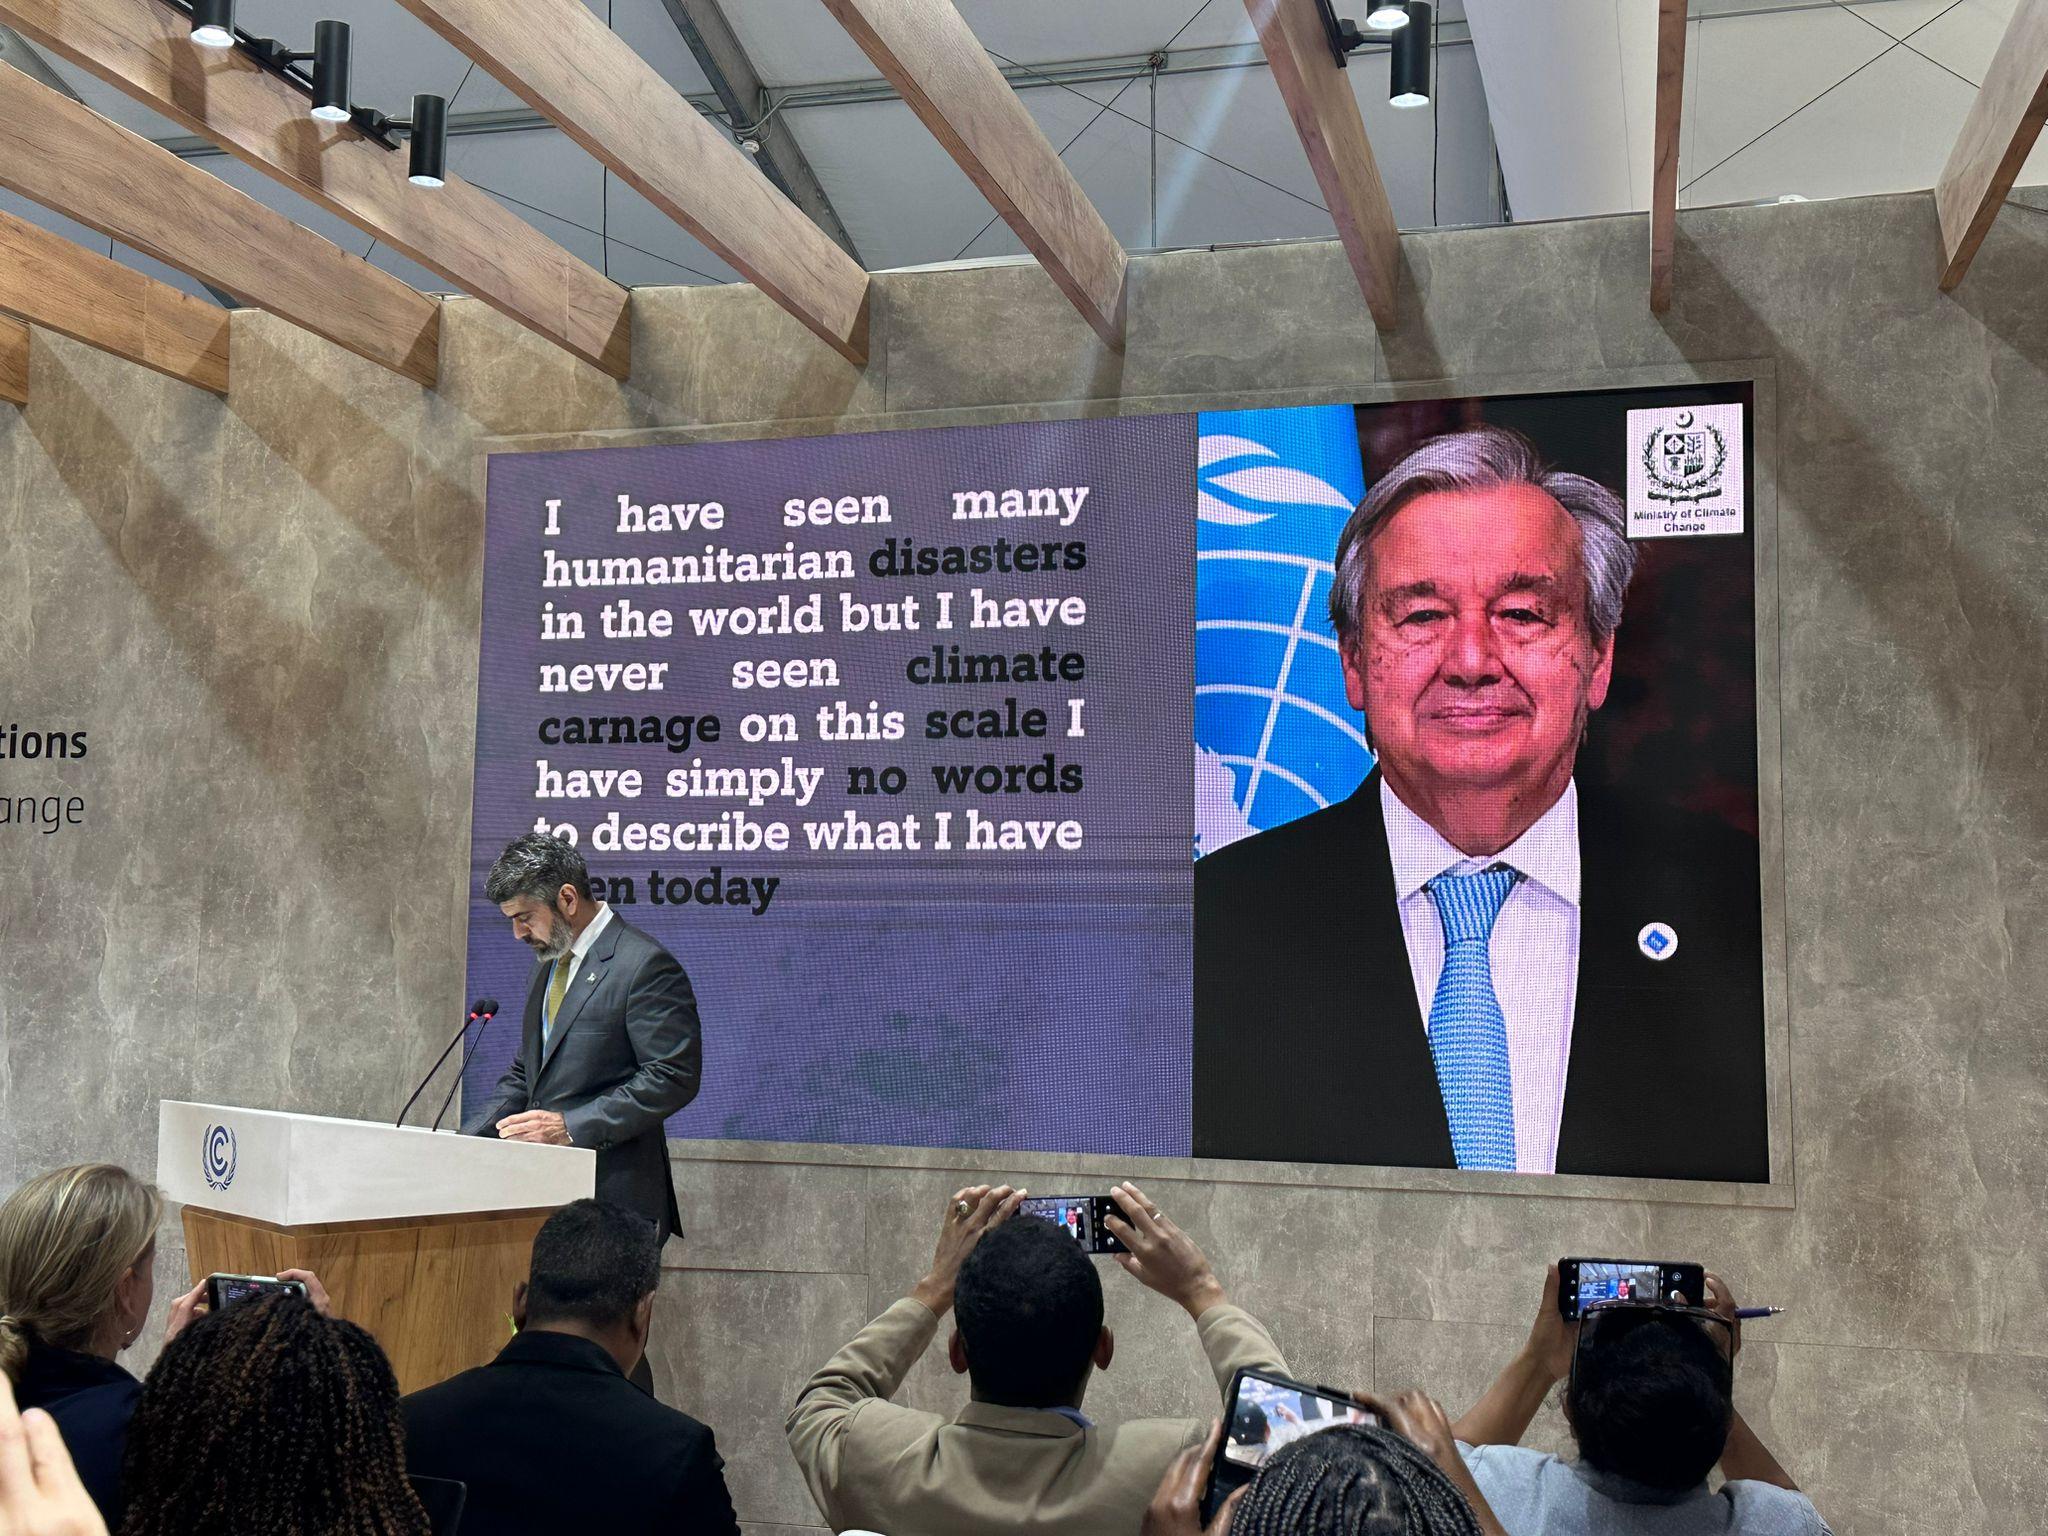 UN Secretary-General António Guterres describes his visit to Pakistan as 'climate carnage'